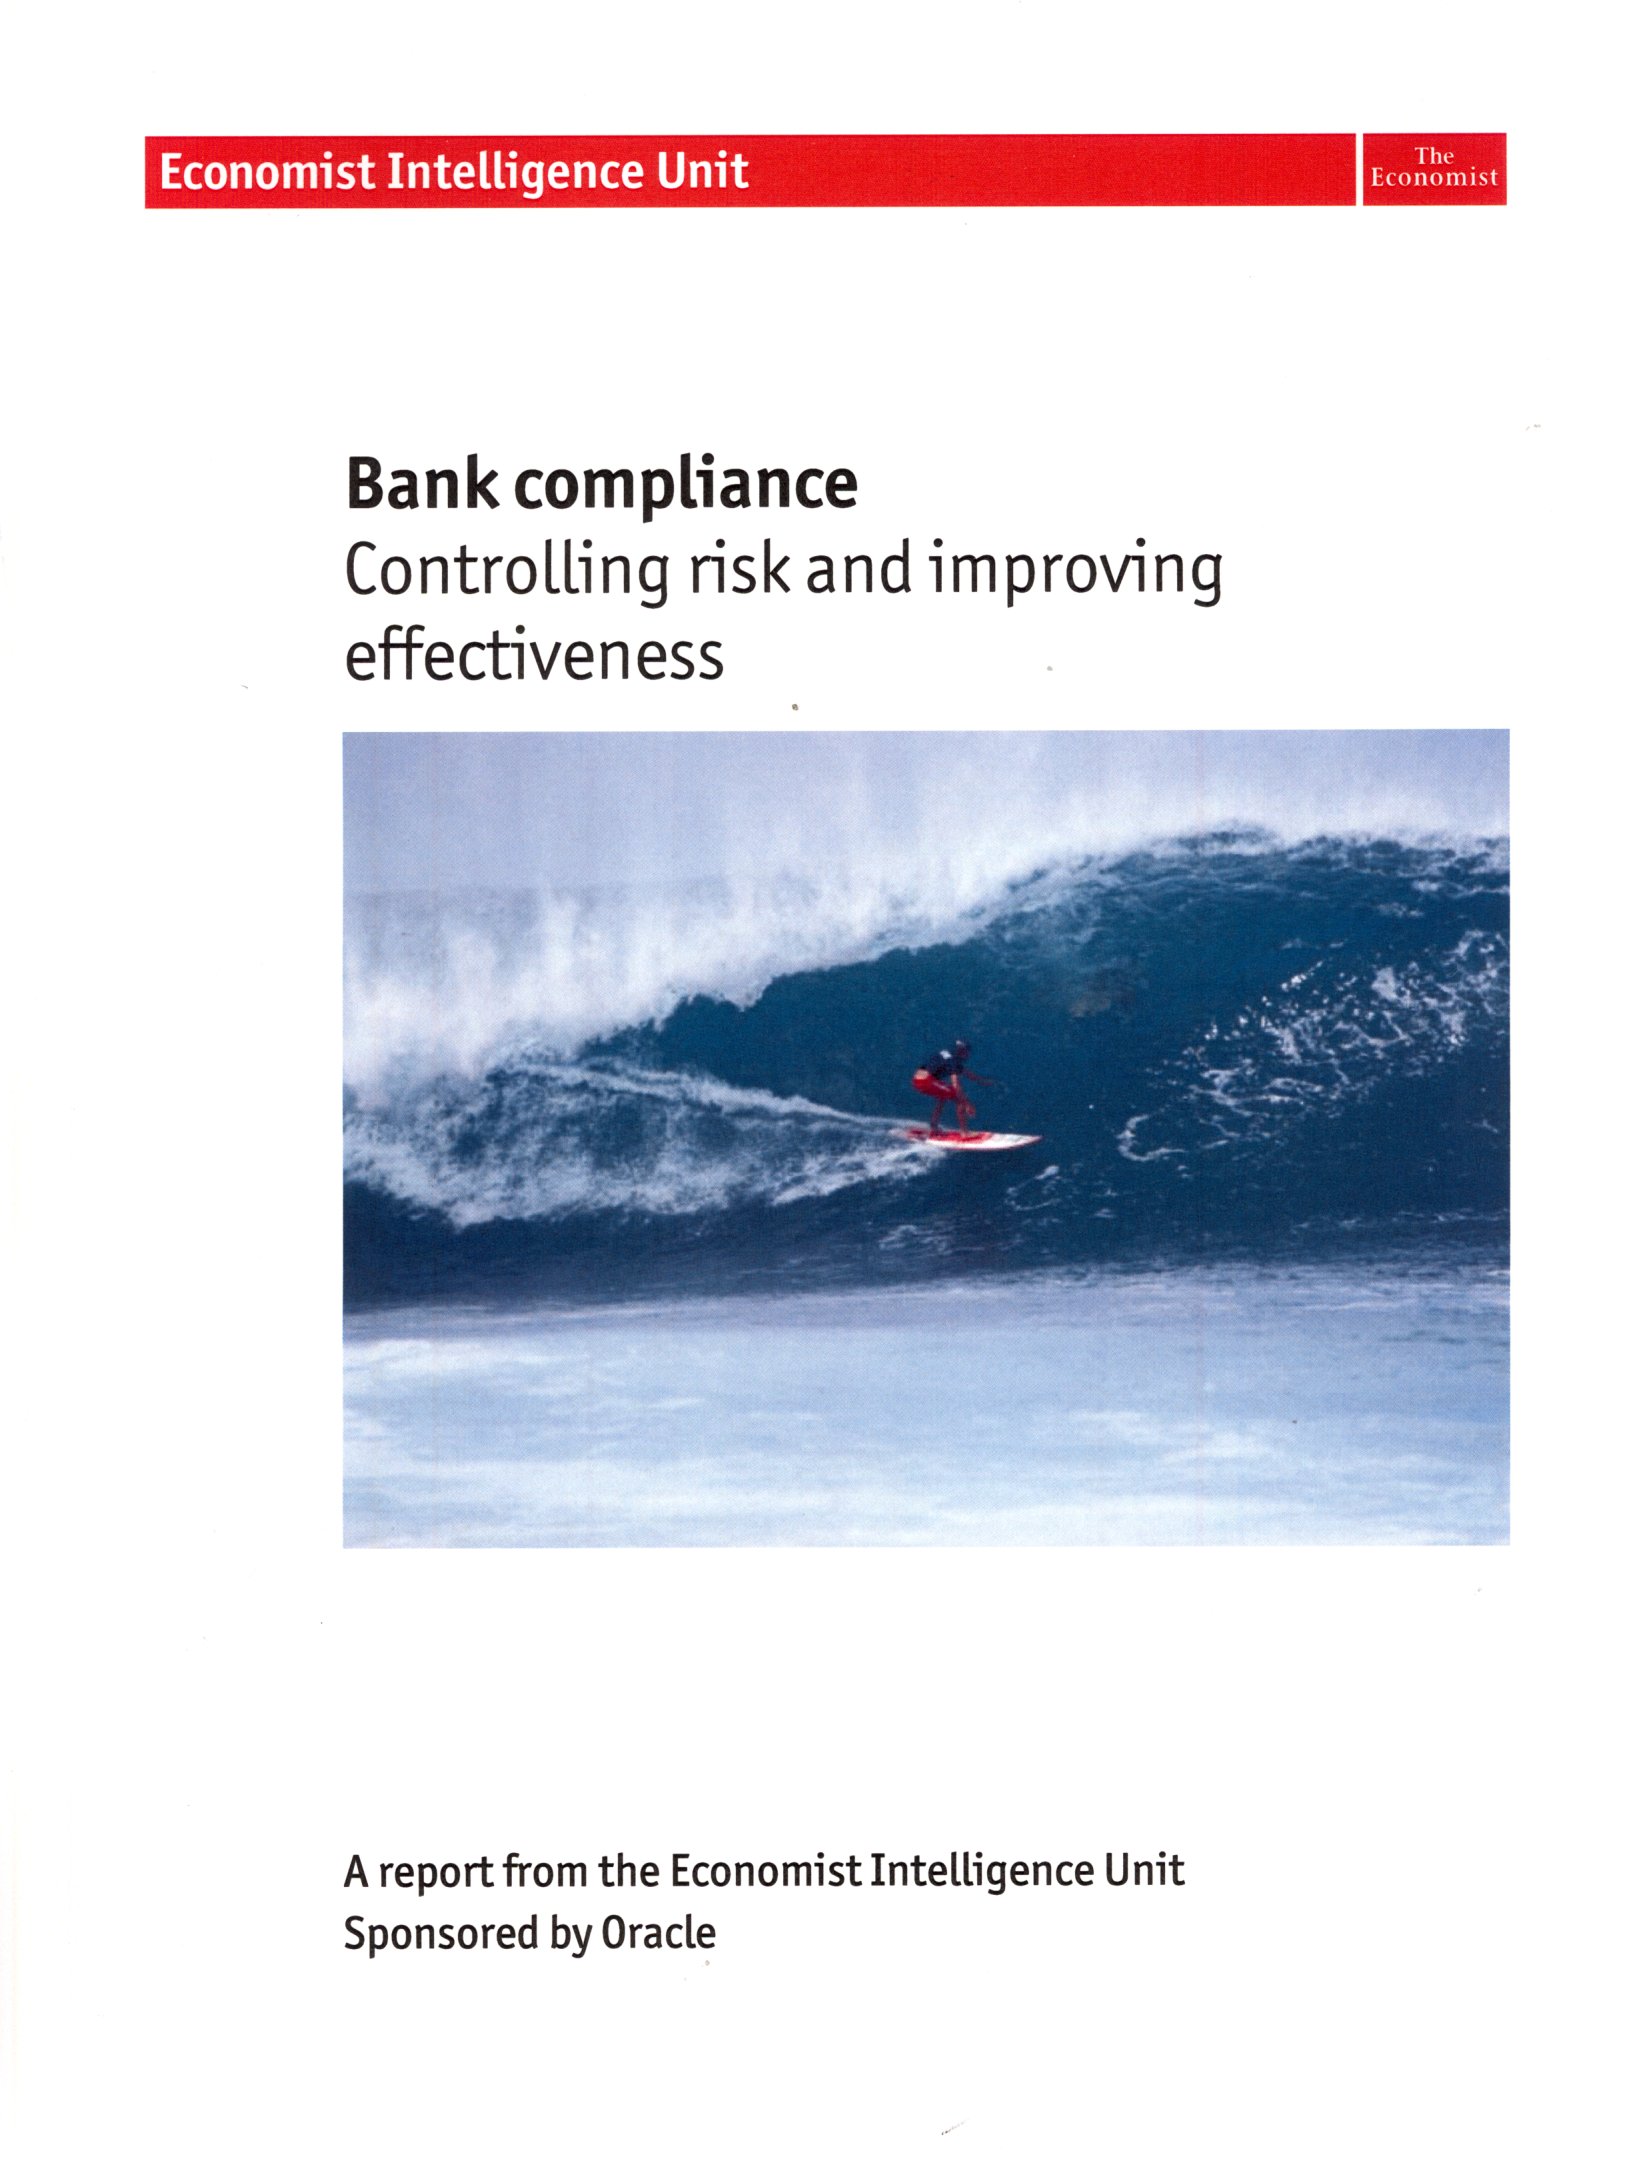 Imagen de la cubierta de Bank compliance